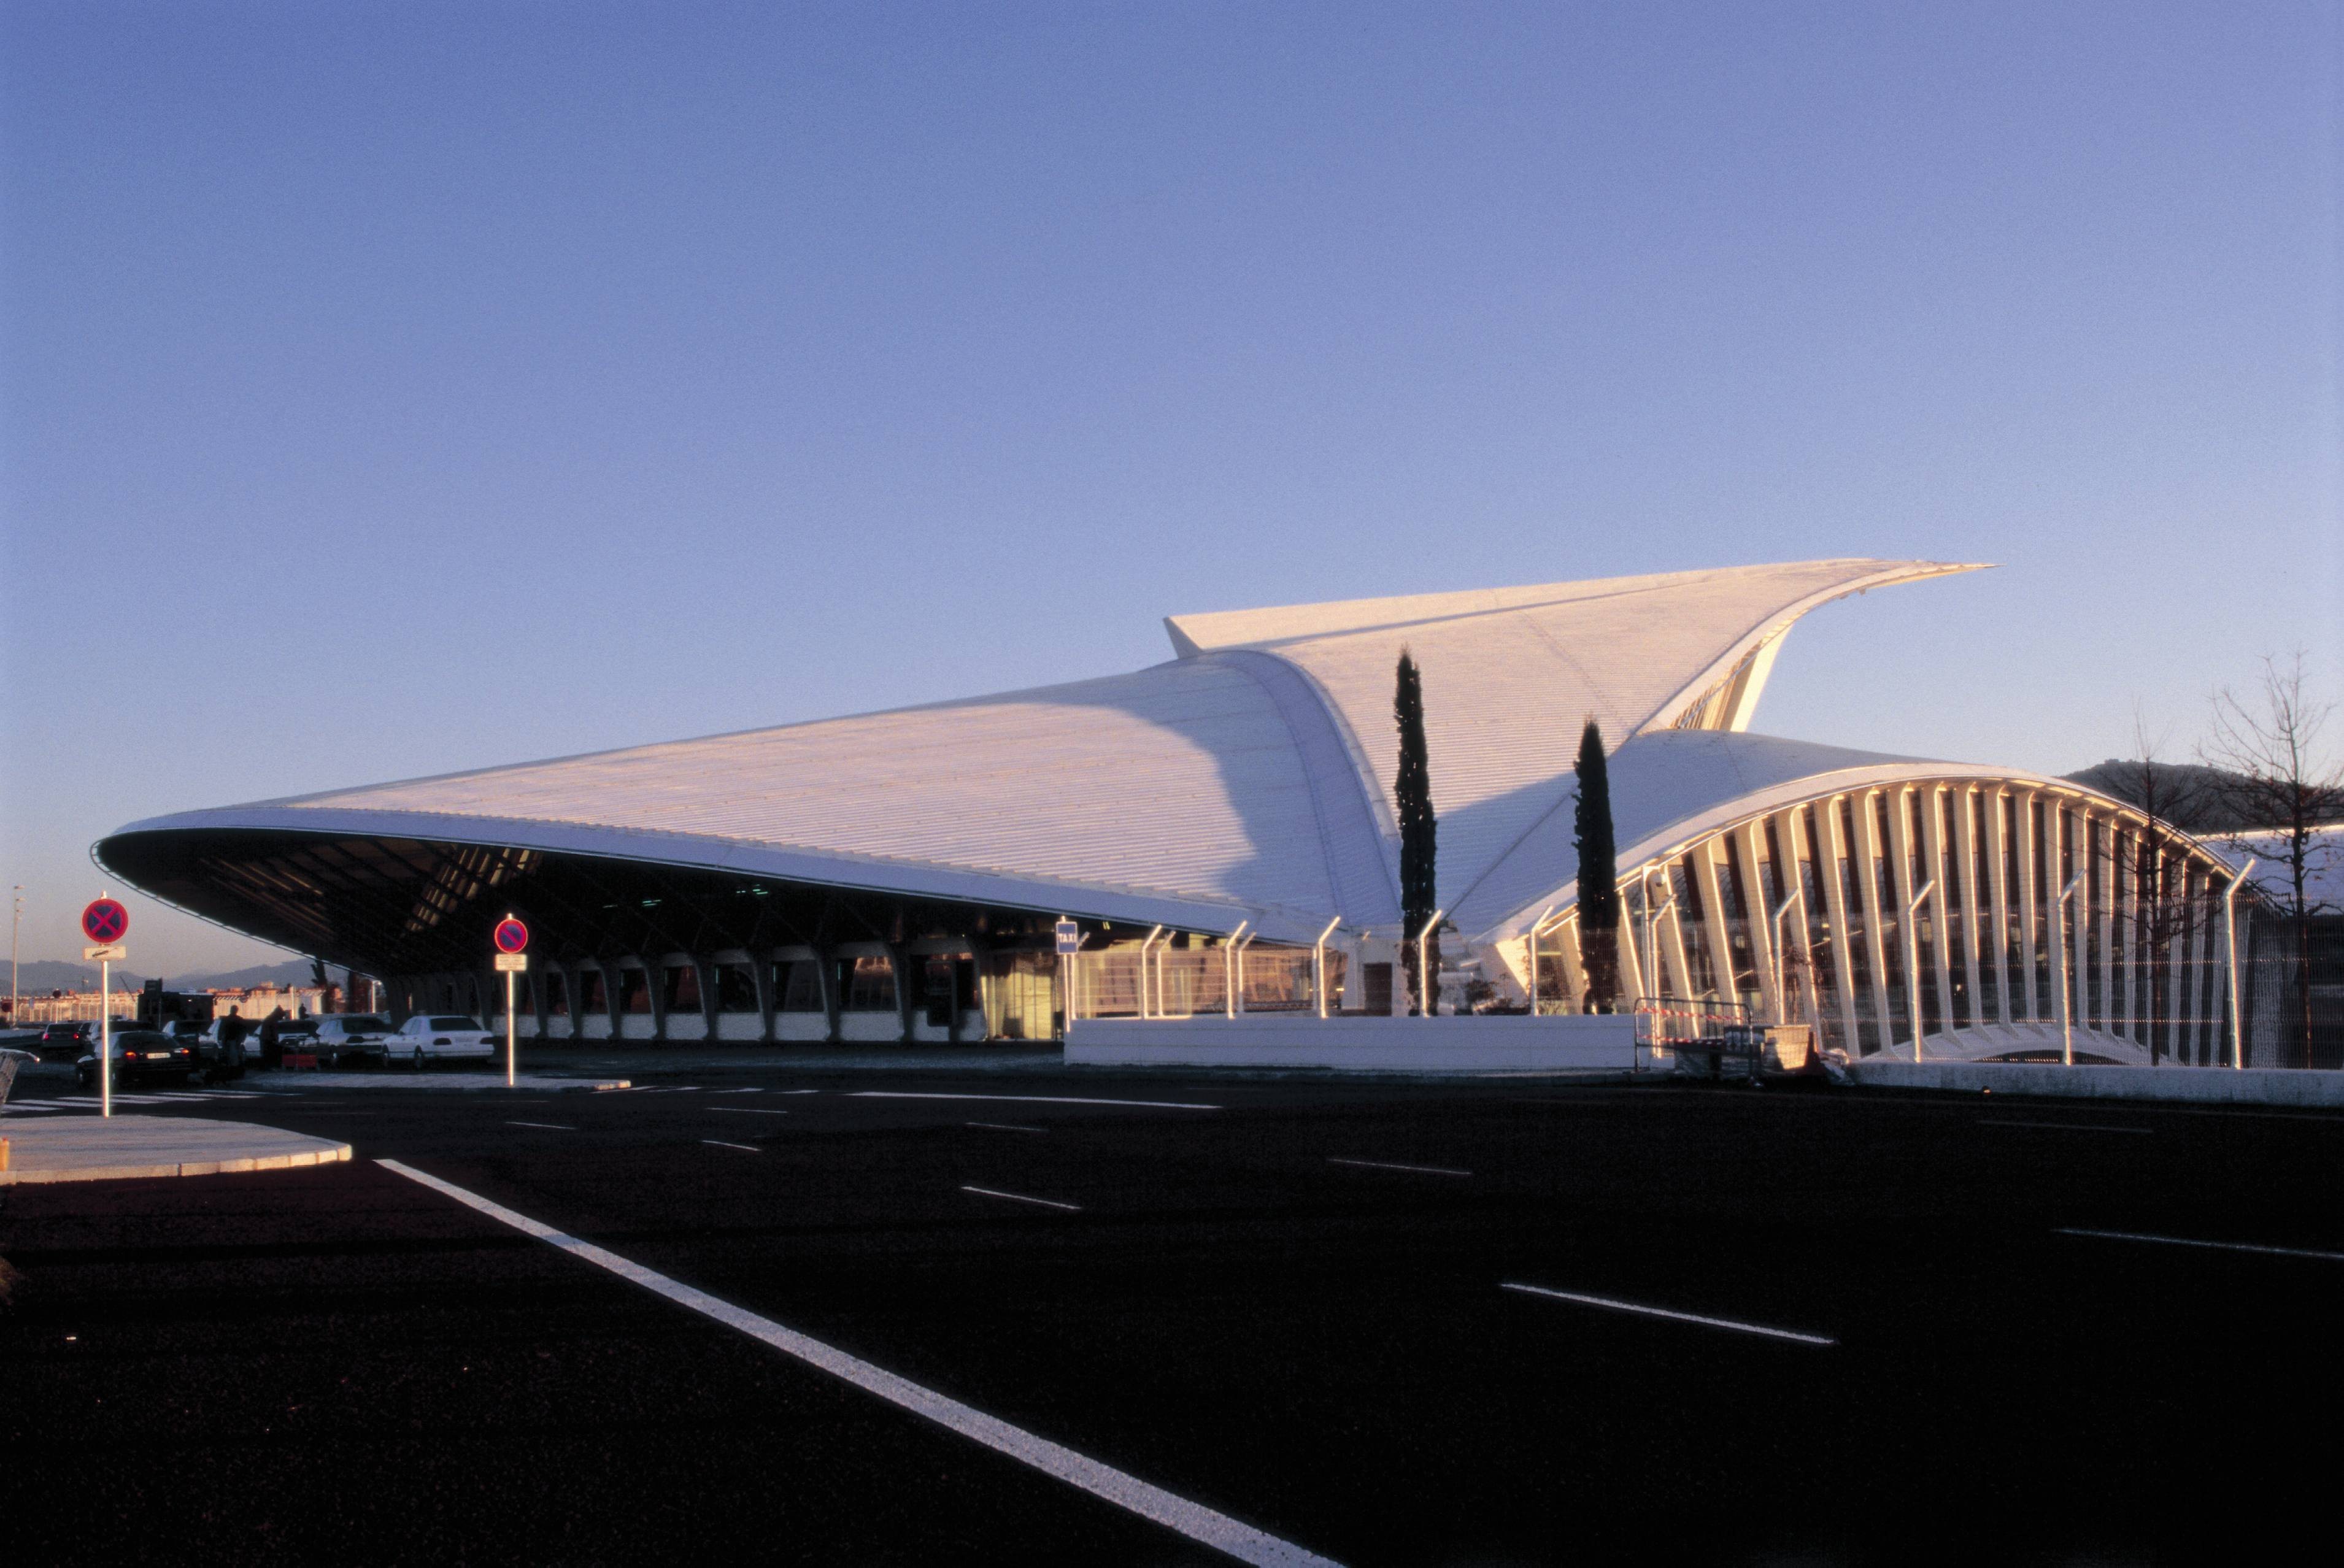 La Paloma airport, Bilbao